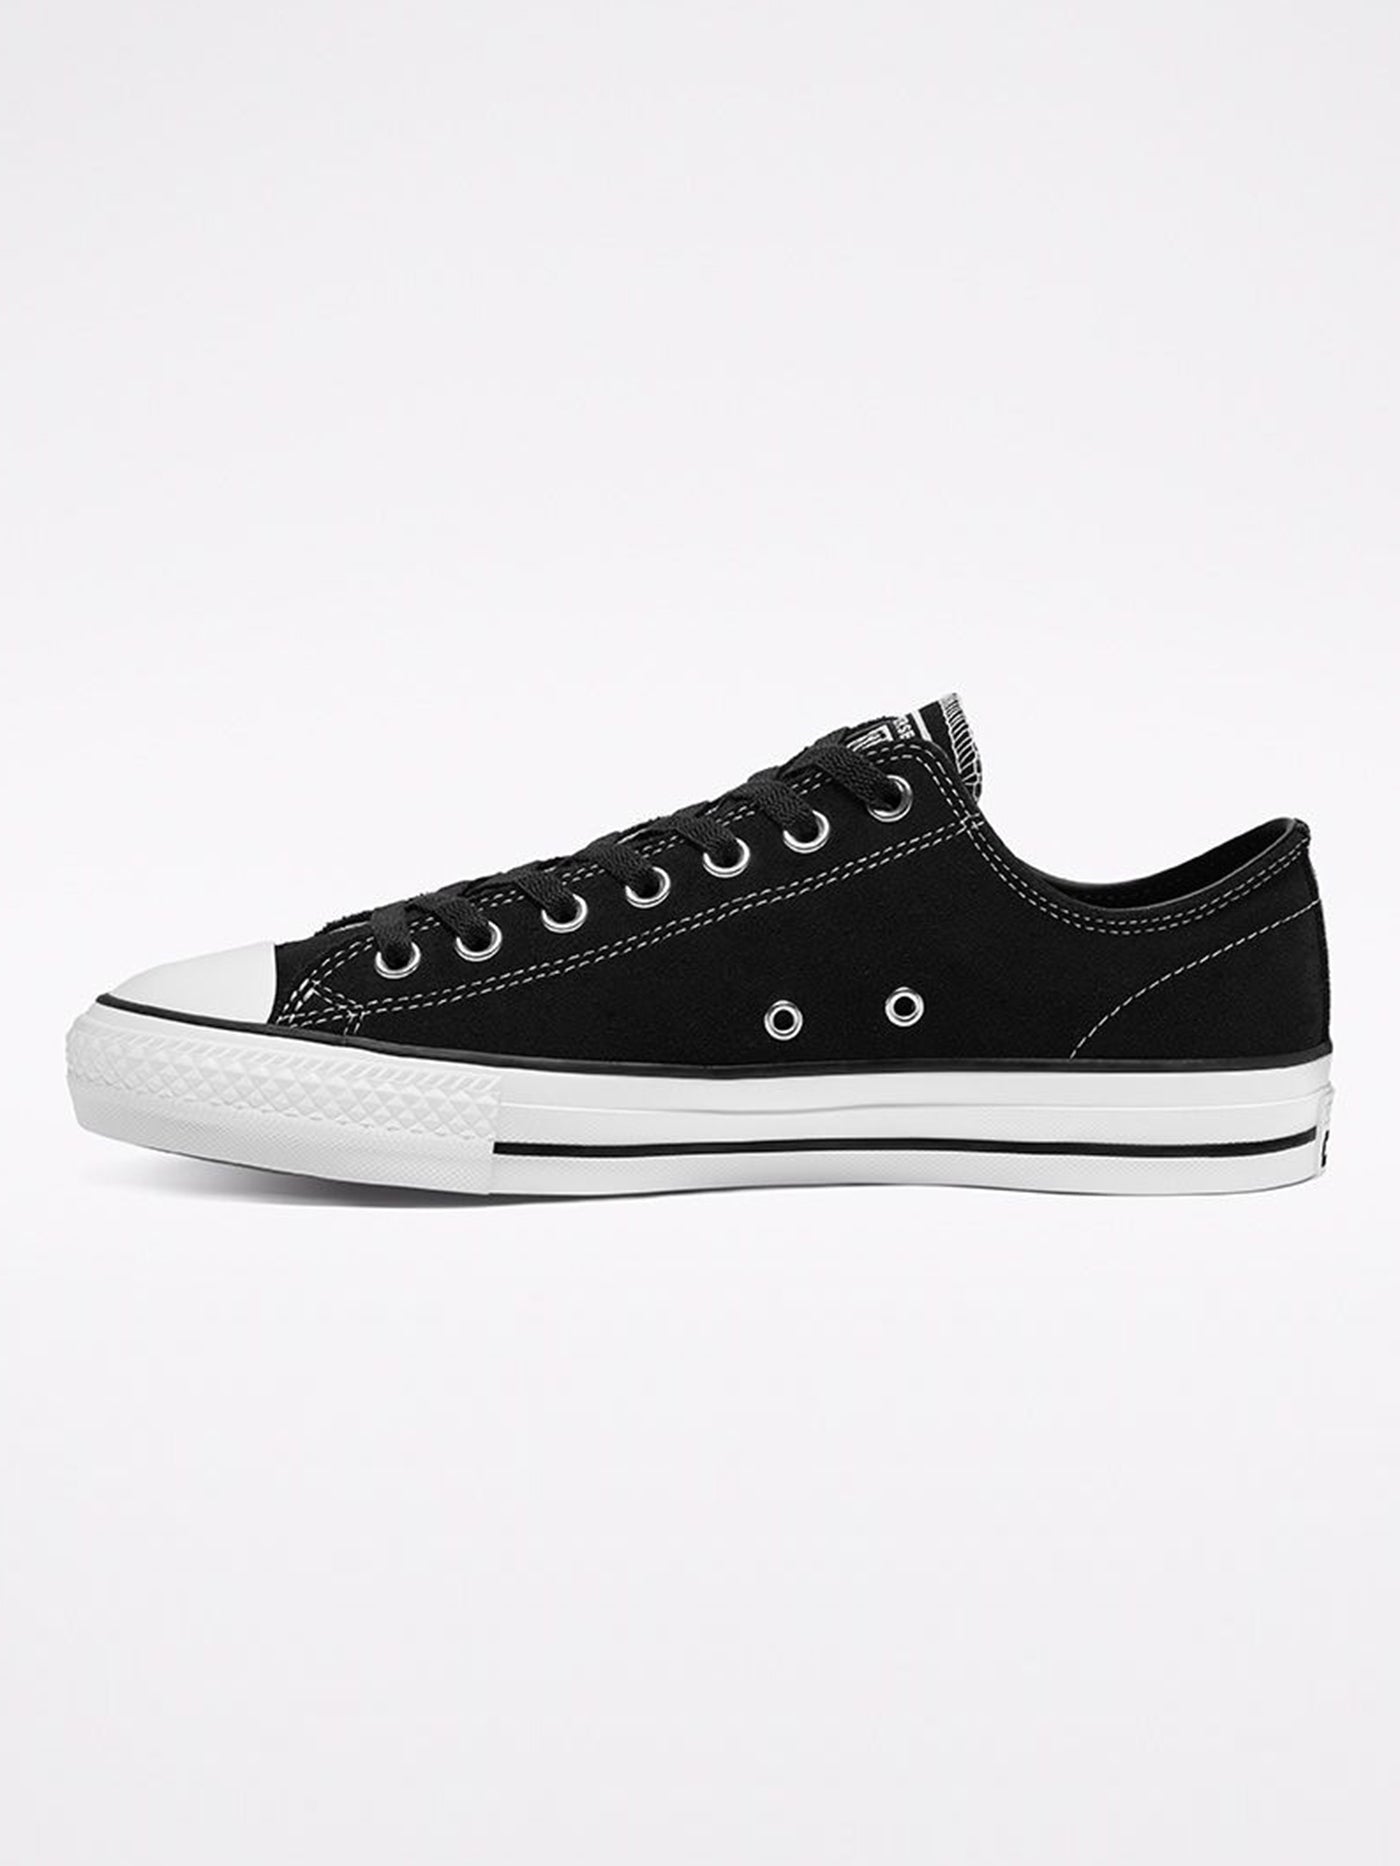 Converse Chuck Taylor All Star OX Black/Black/White Shoes